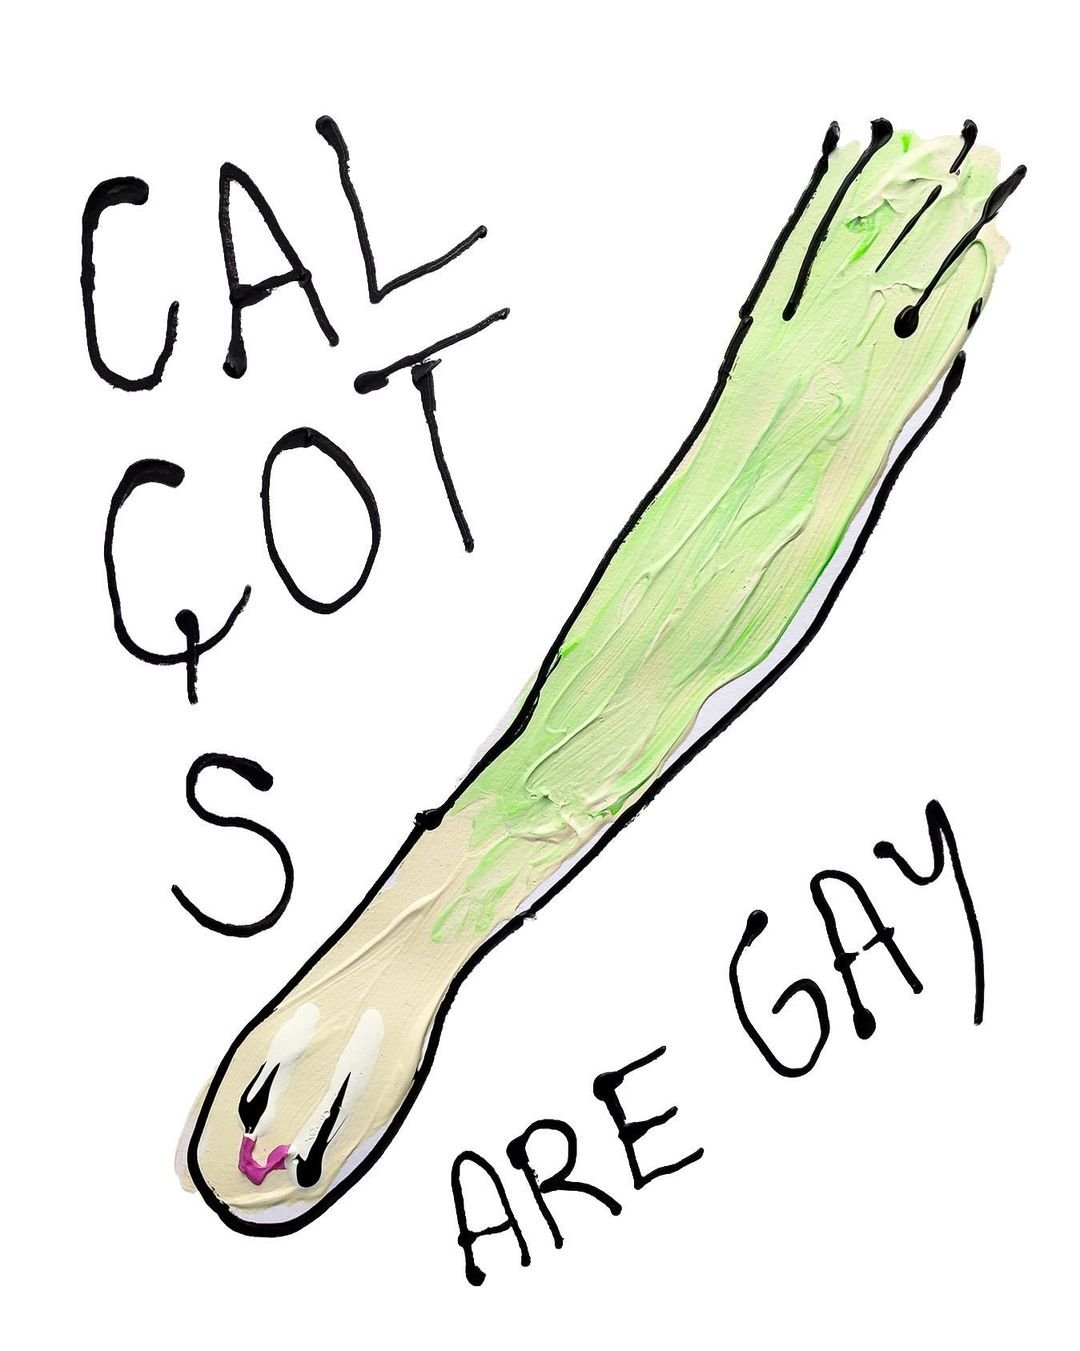 Calçots gay